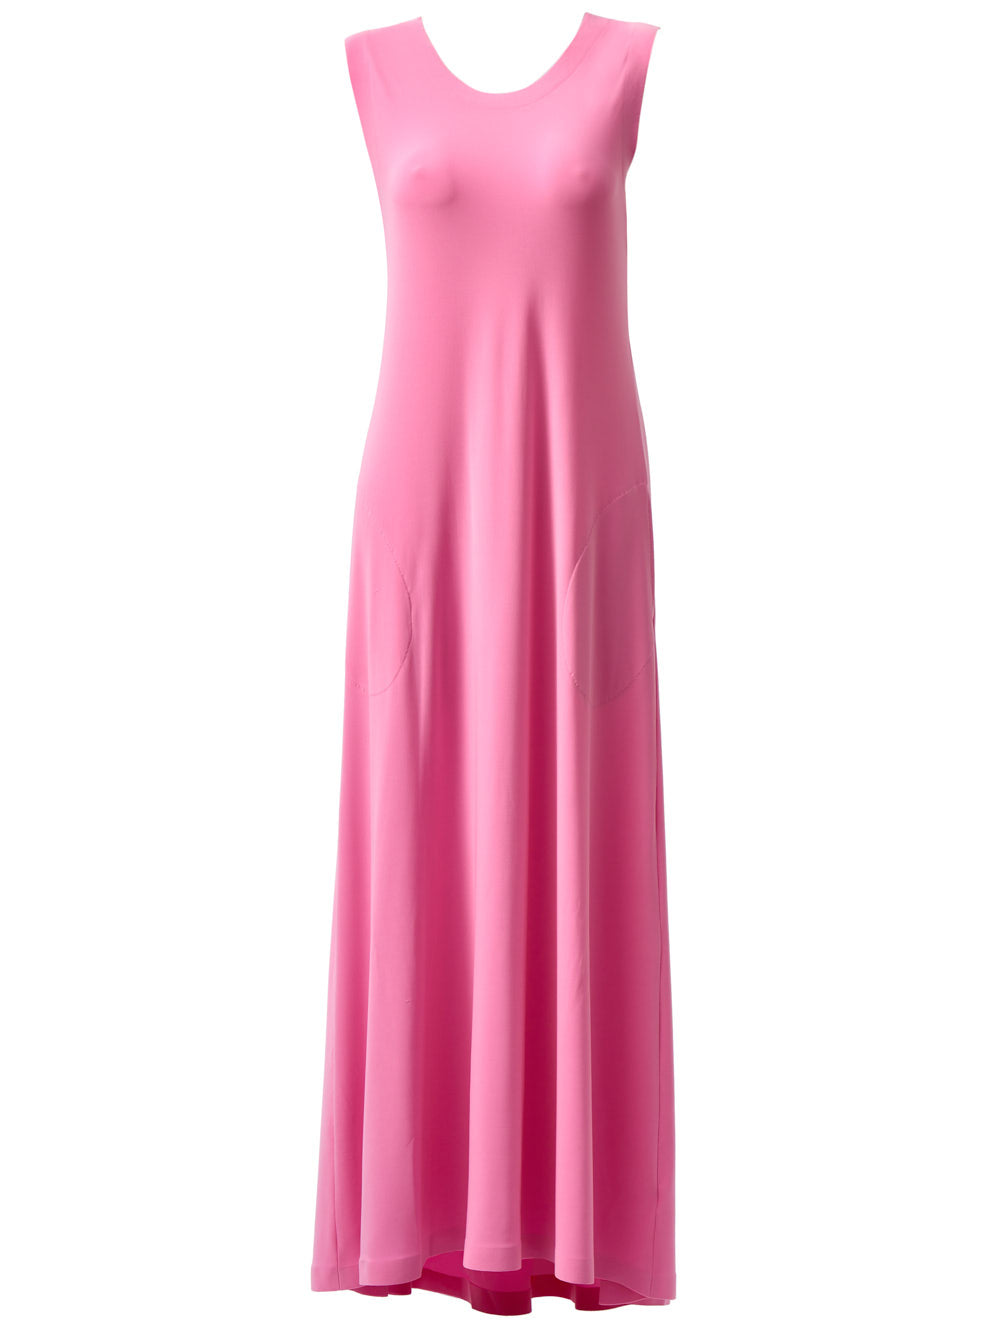 Long sleeveless swing dress in Candy Pink